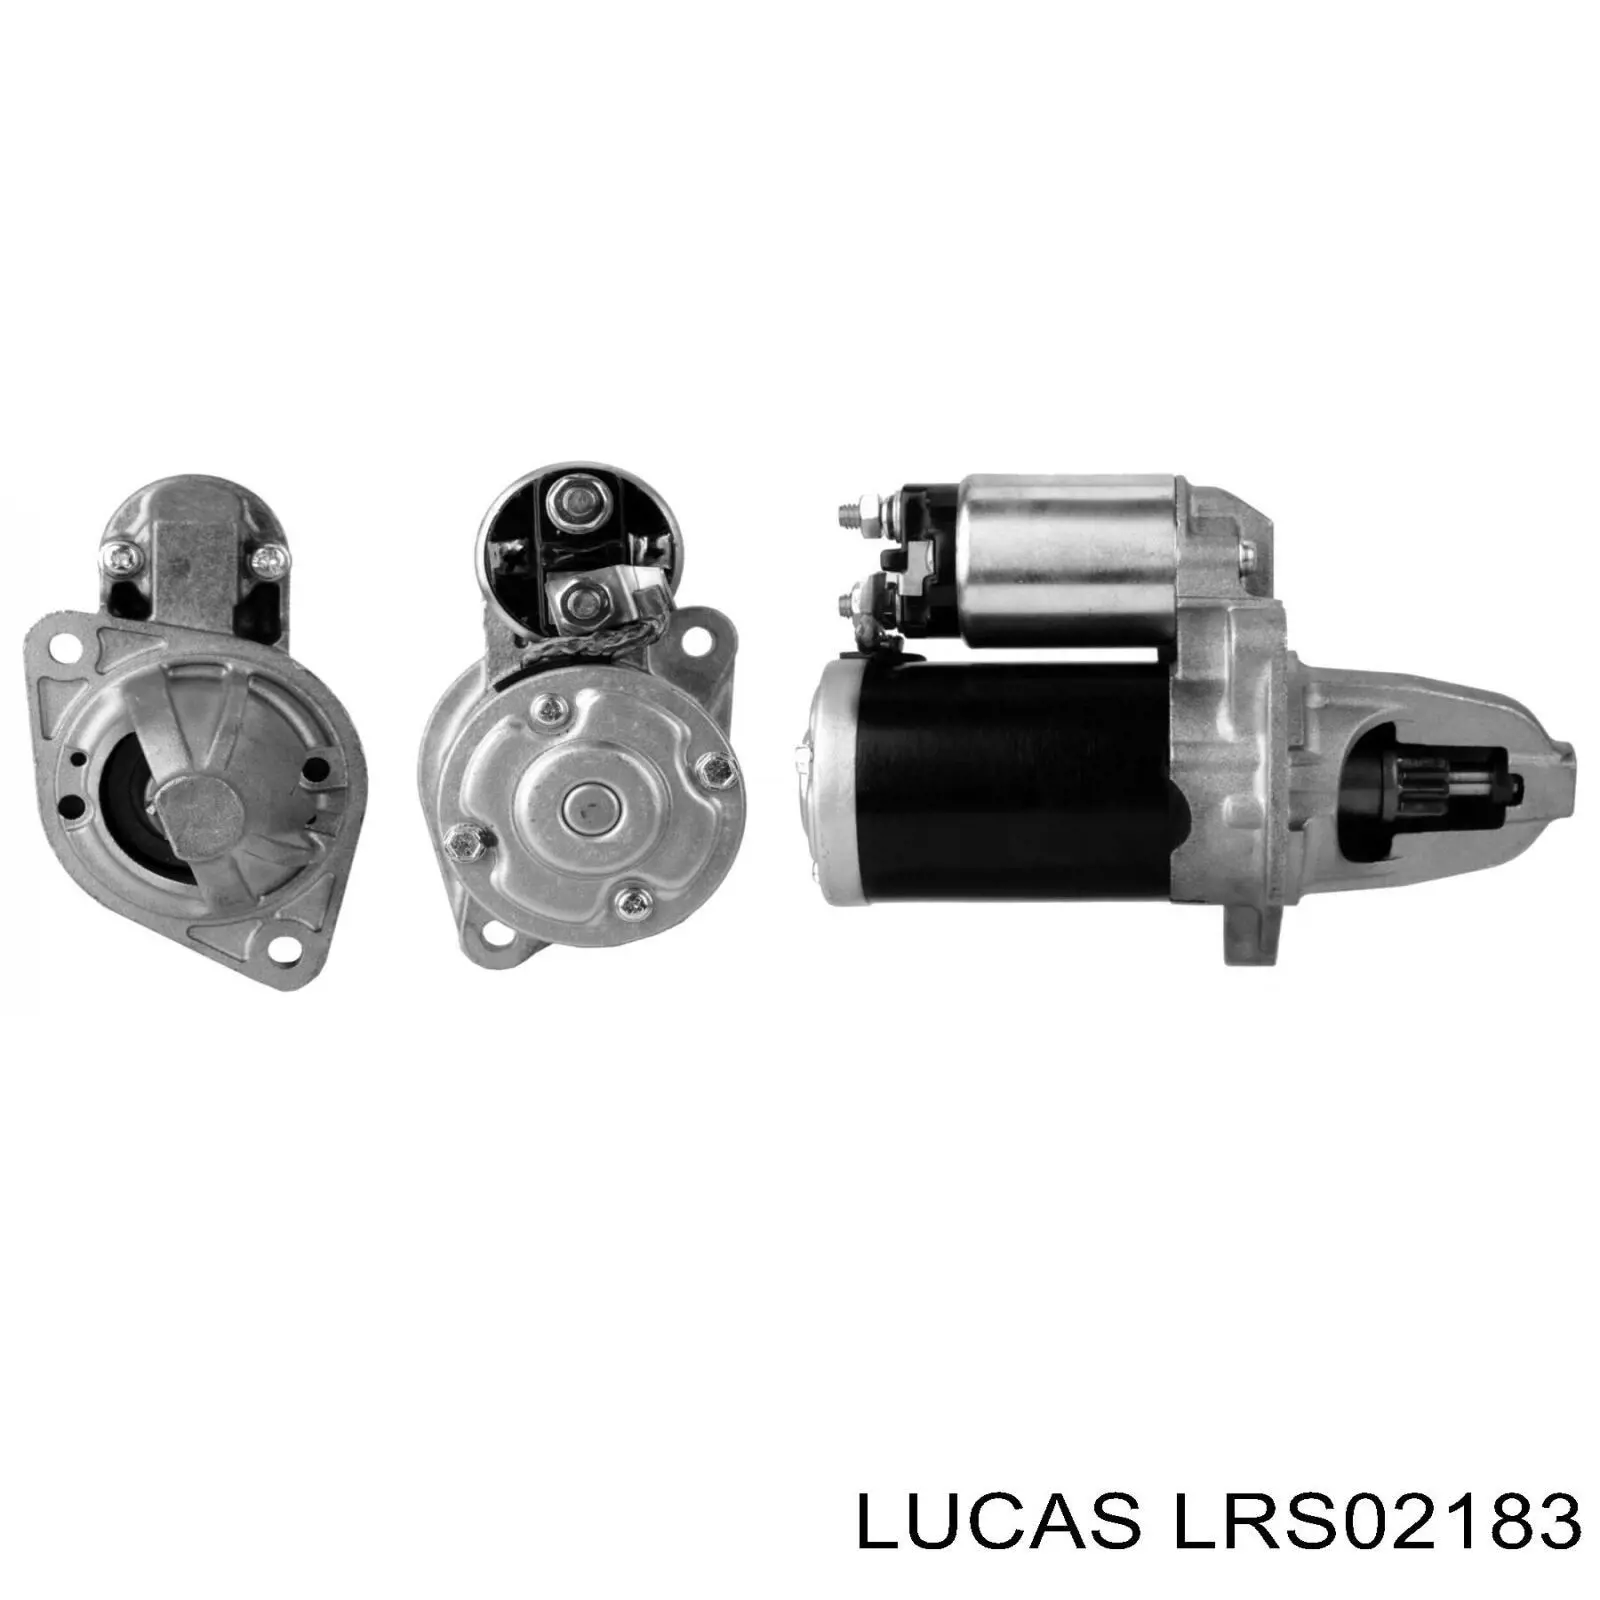 Motor de arranque LRS02183 Lucas